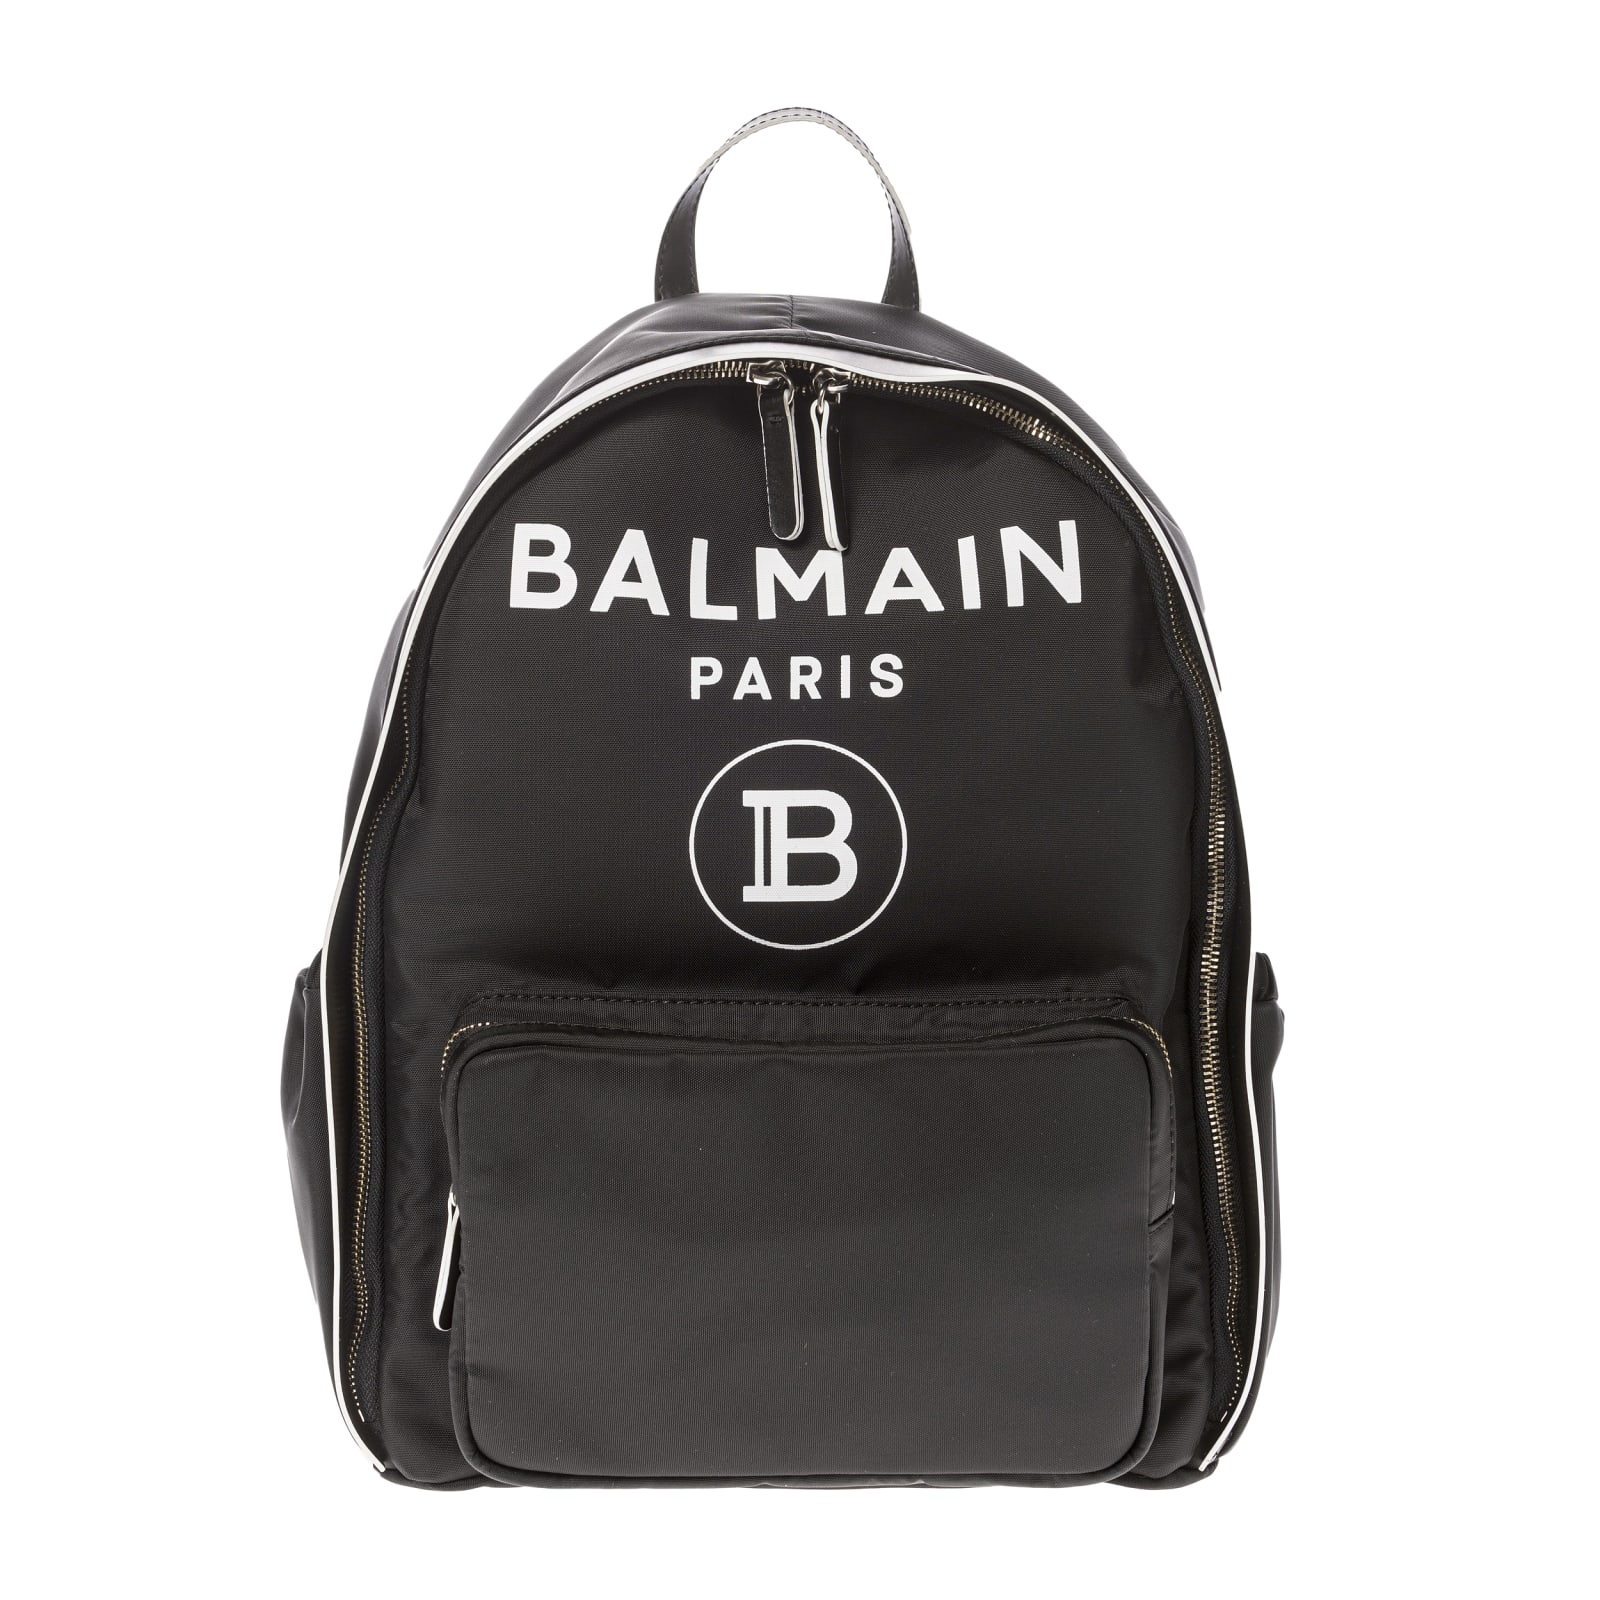 Balmain backpack with logo